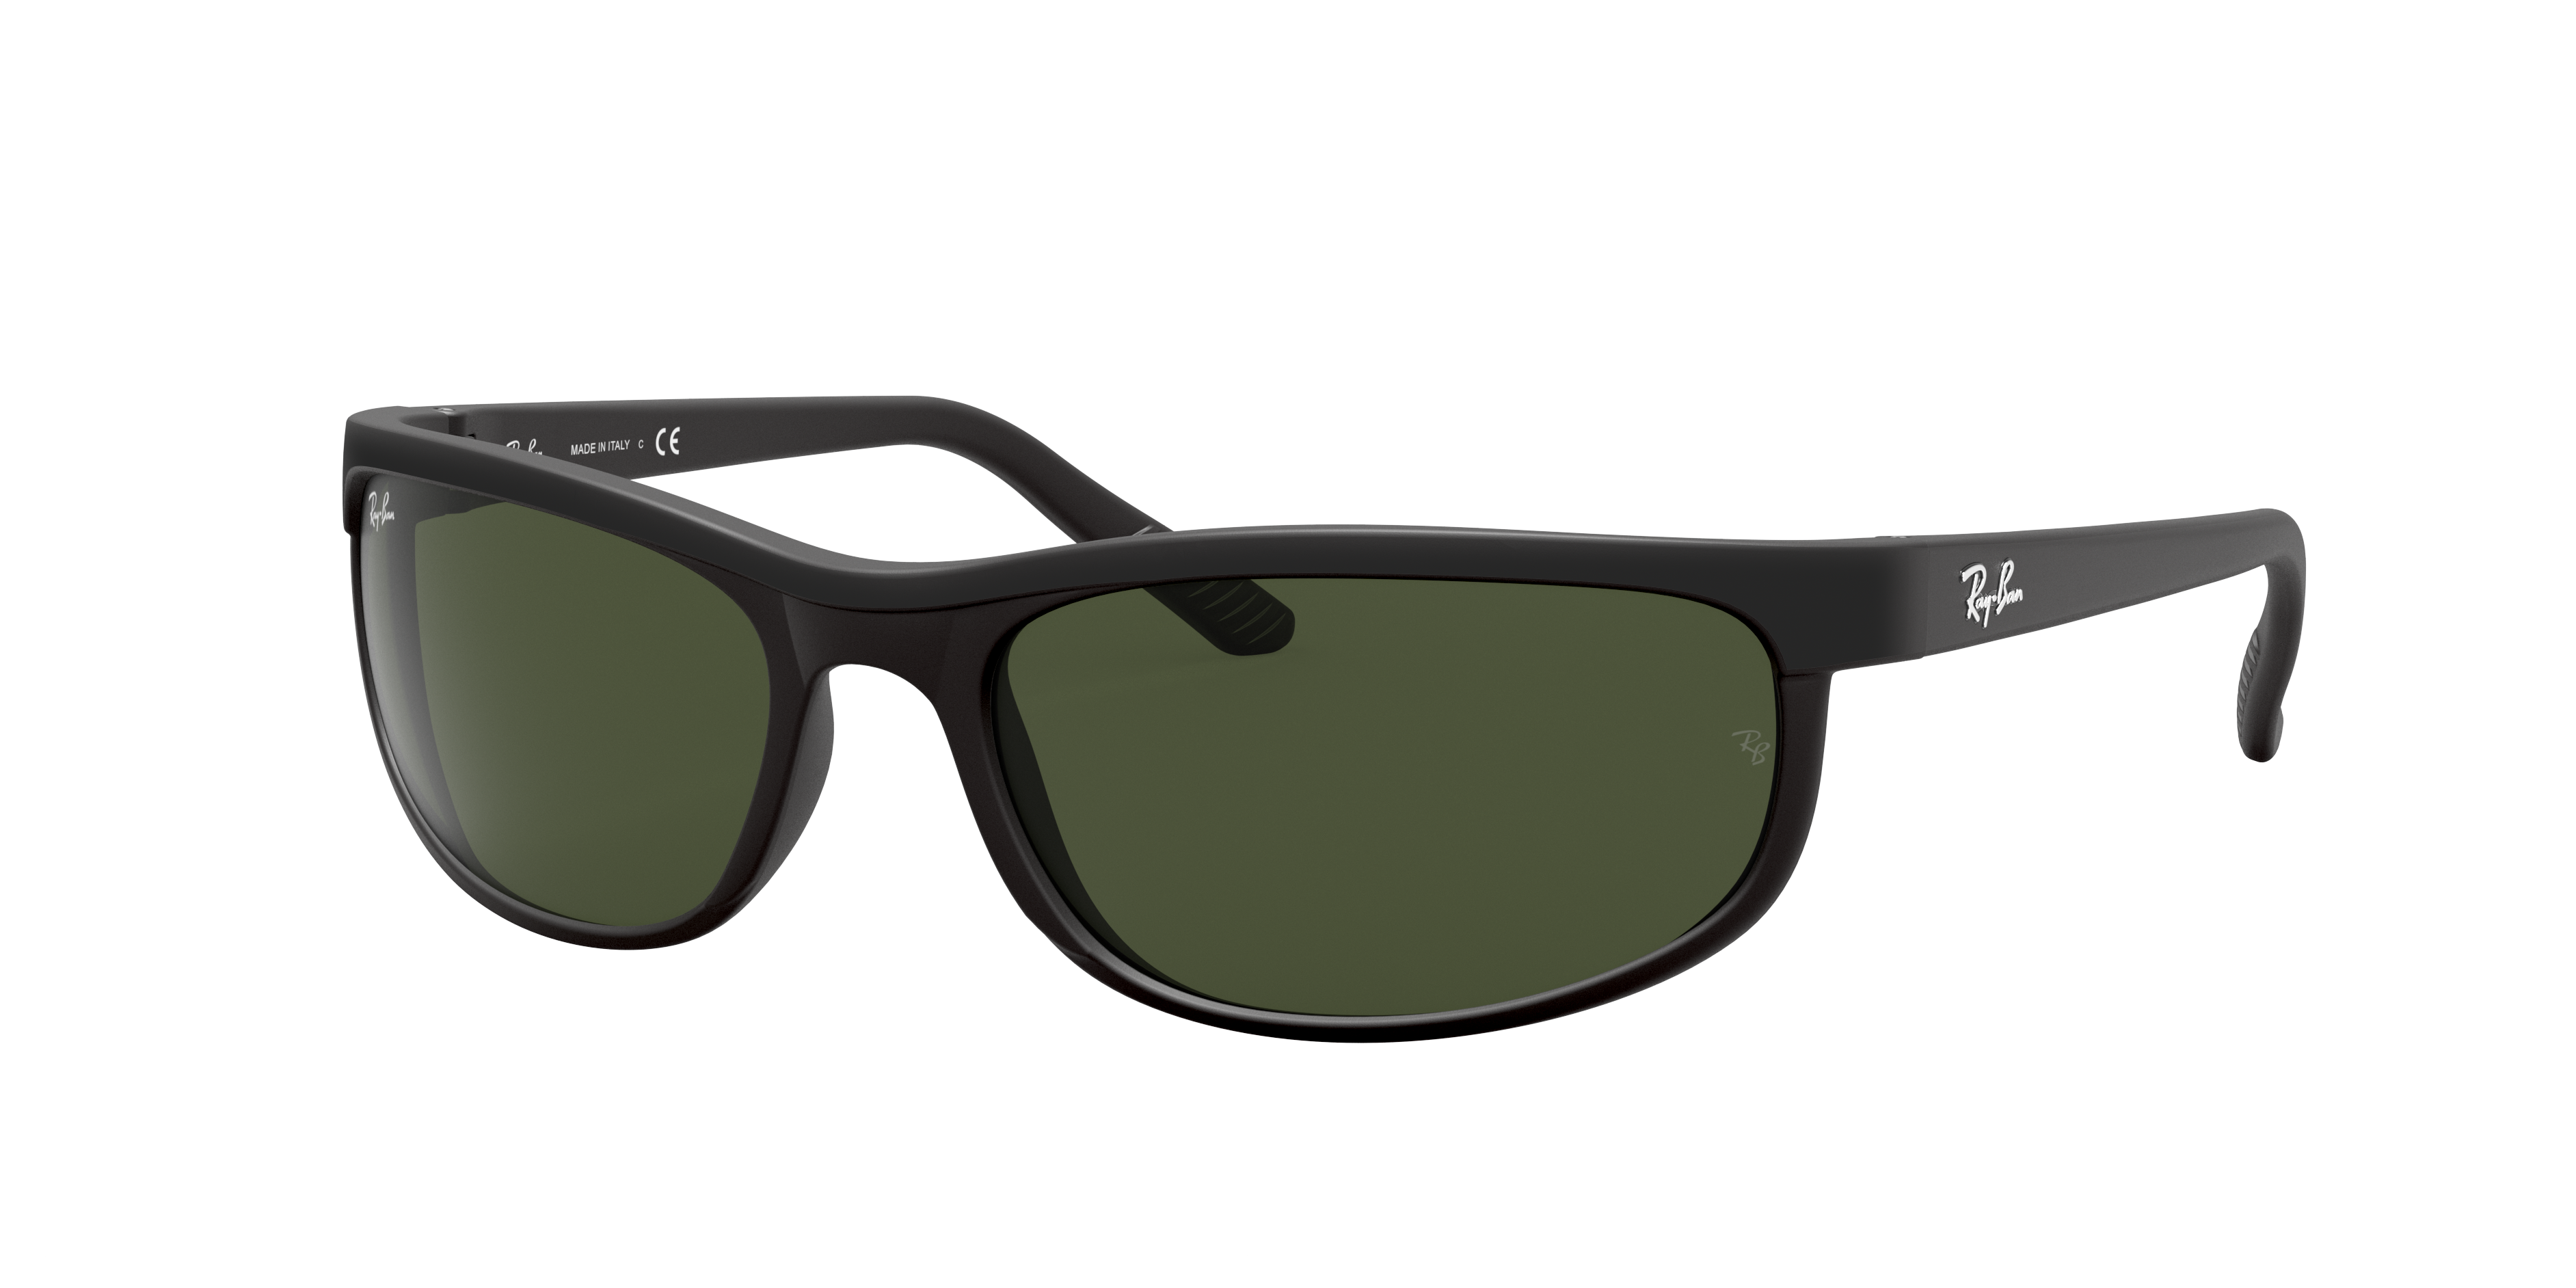 Tijdig kroeg Vermoorden Predator 2 Sunglasses in Black and Green | Ray-Ban®